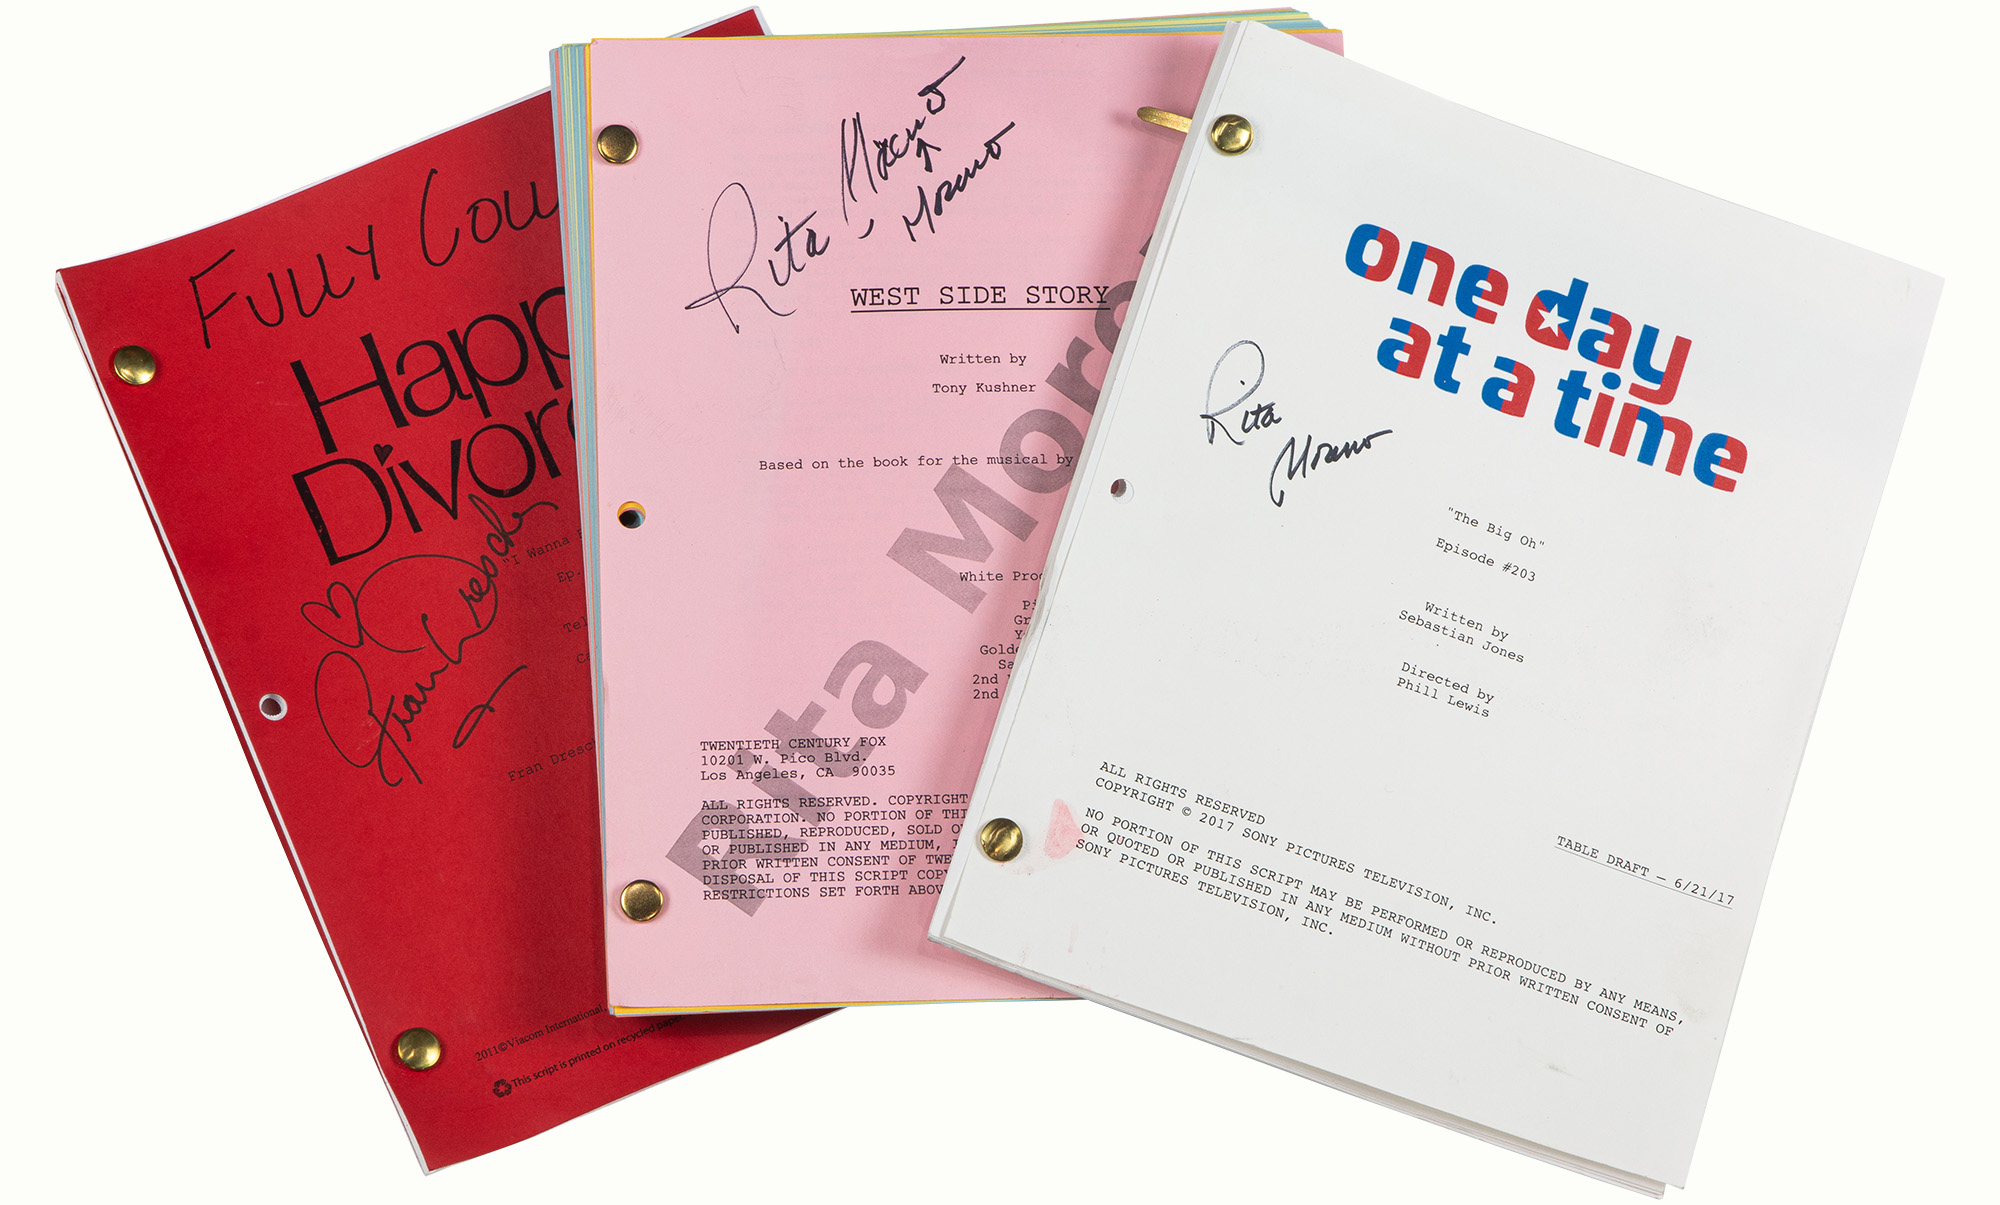 Scripts signed by Rita Moreno.